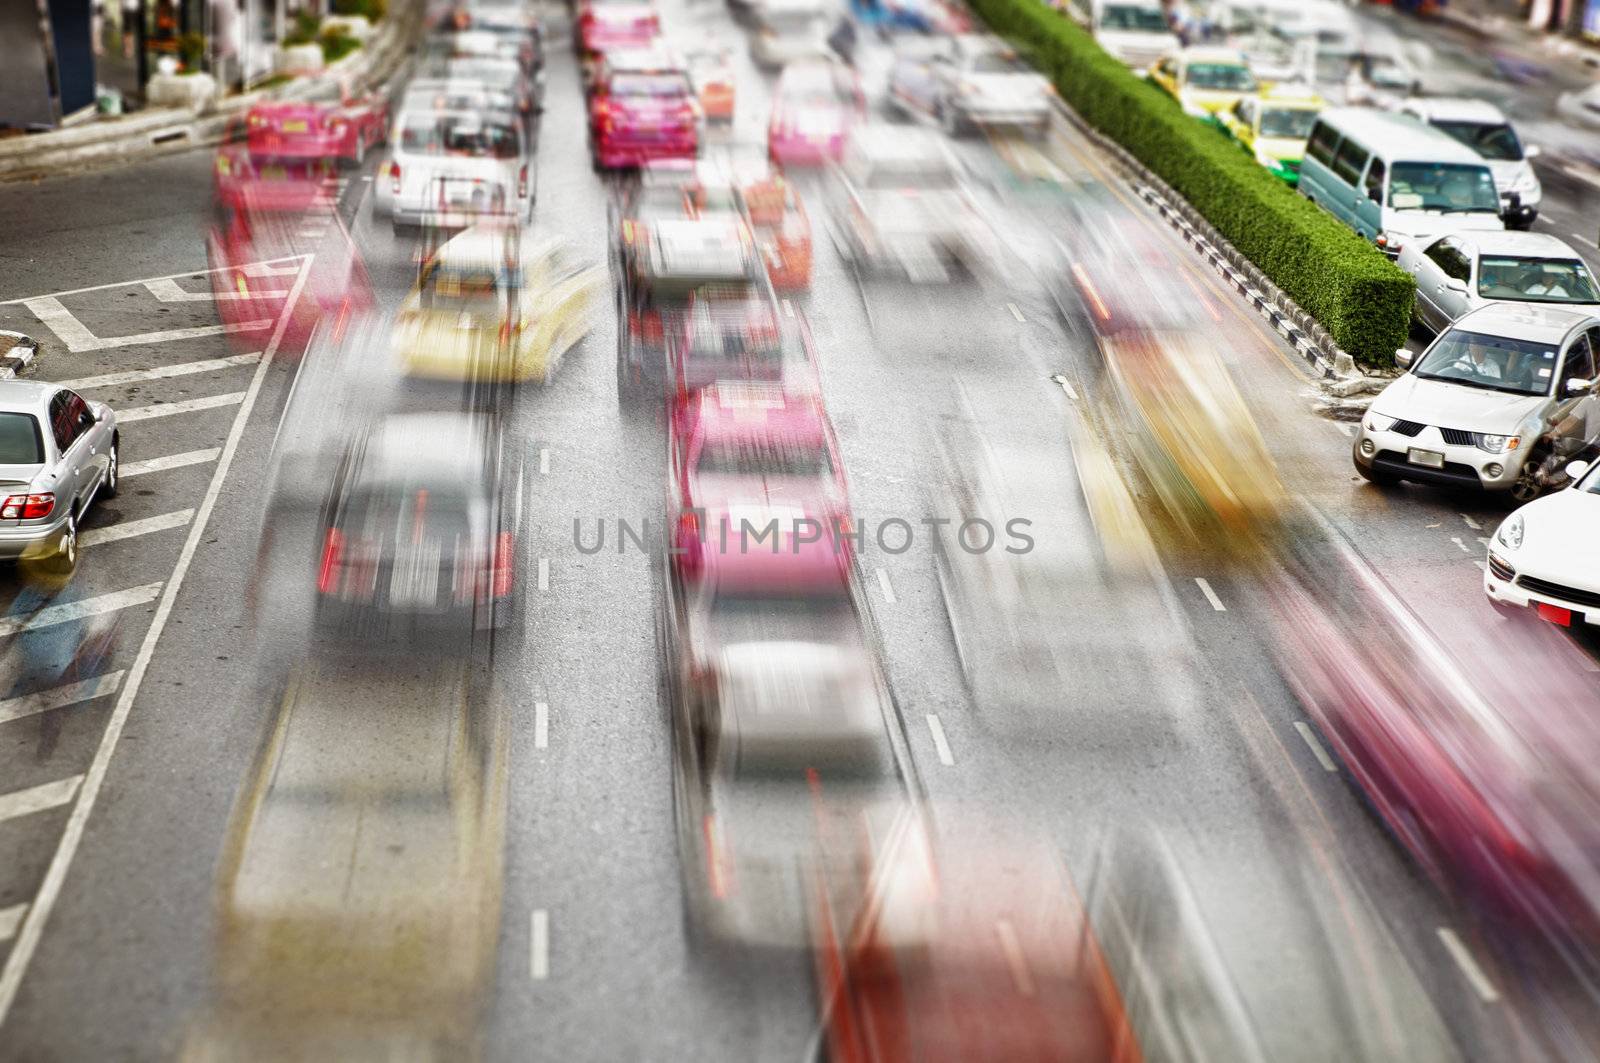 Heavy traffic on the streets. Thailand, Bangkok